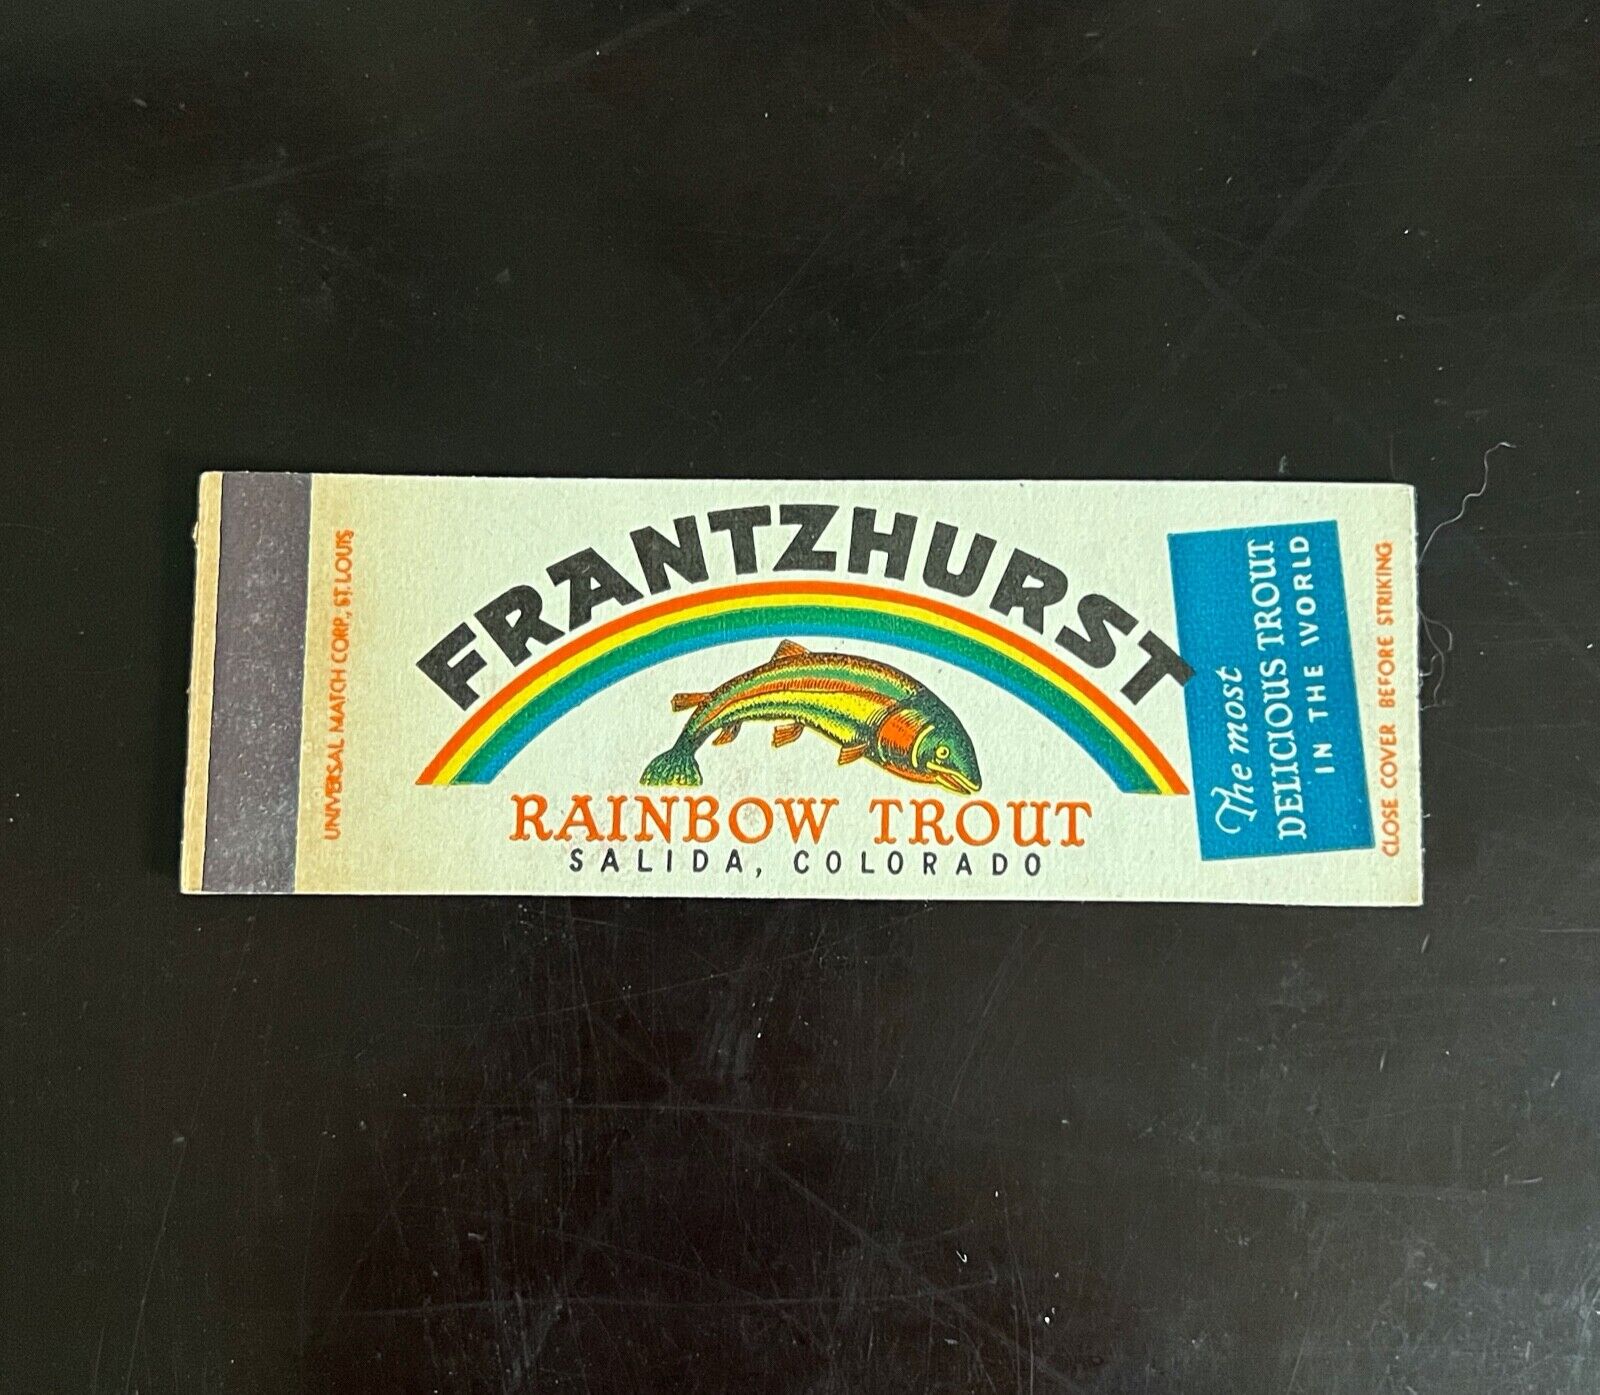 Vintage Sample Matchbook Cover - Frantzhurst Rainbow Trout, Salida Colorado